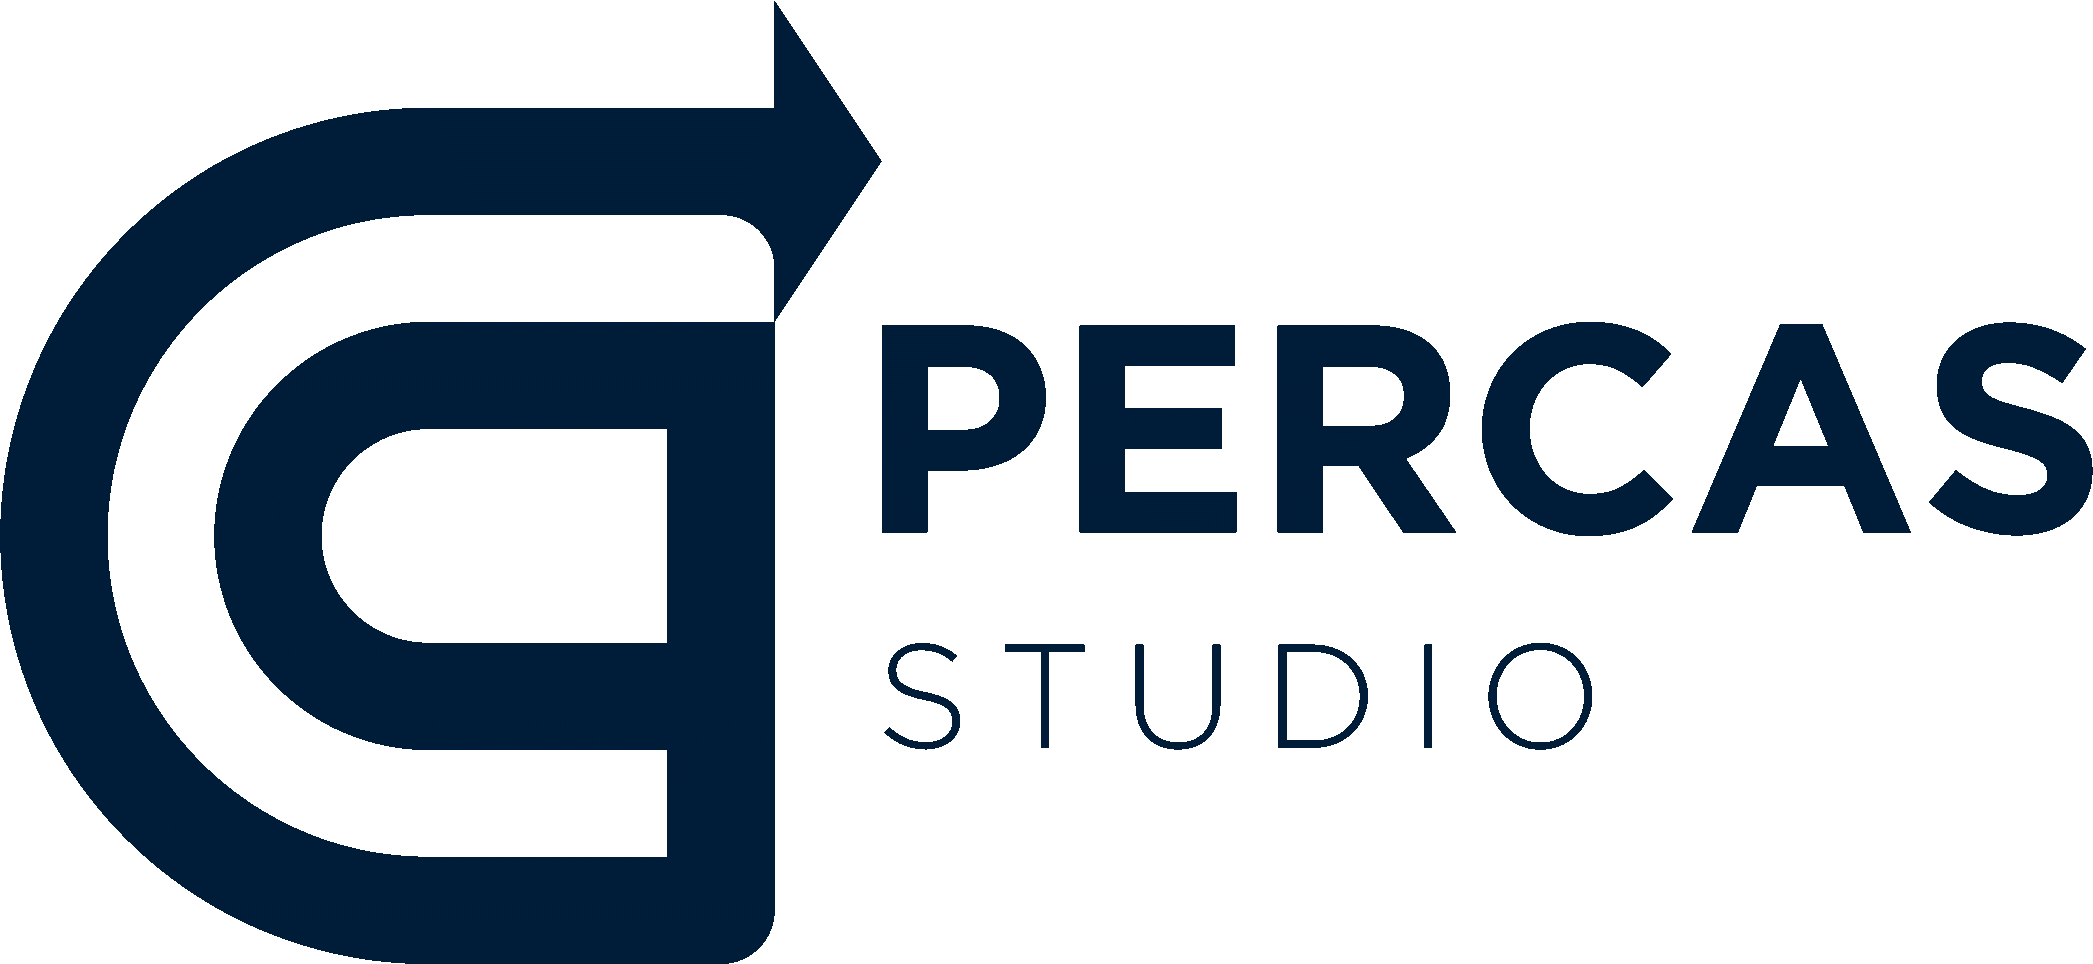 Percas Studio 